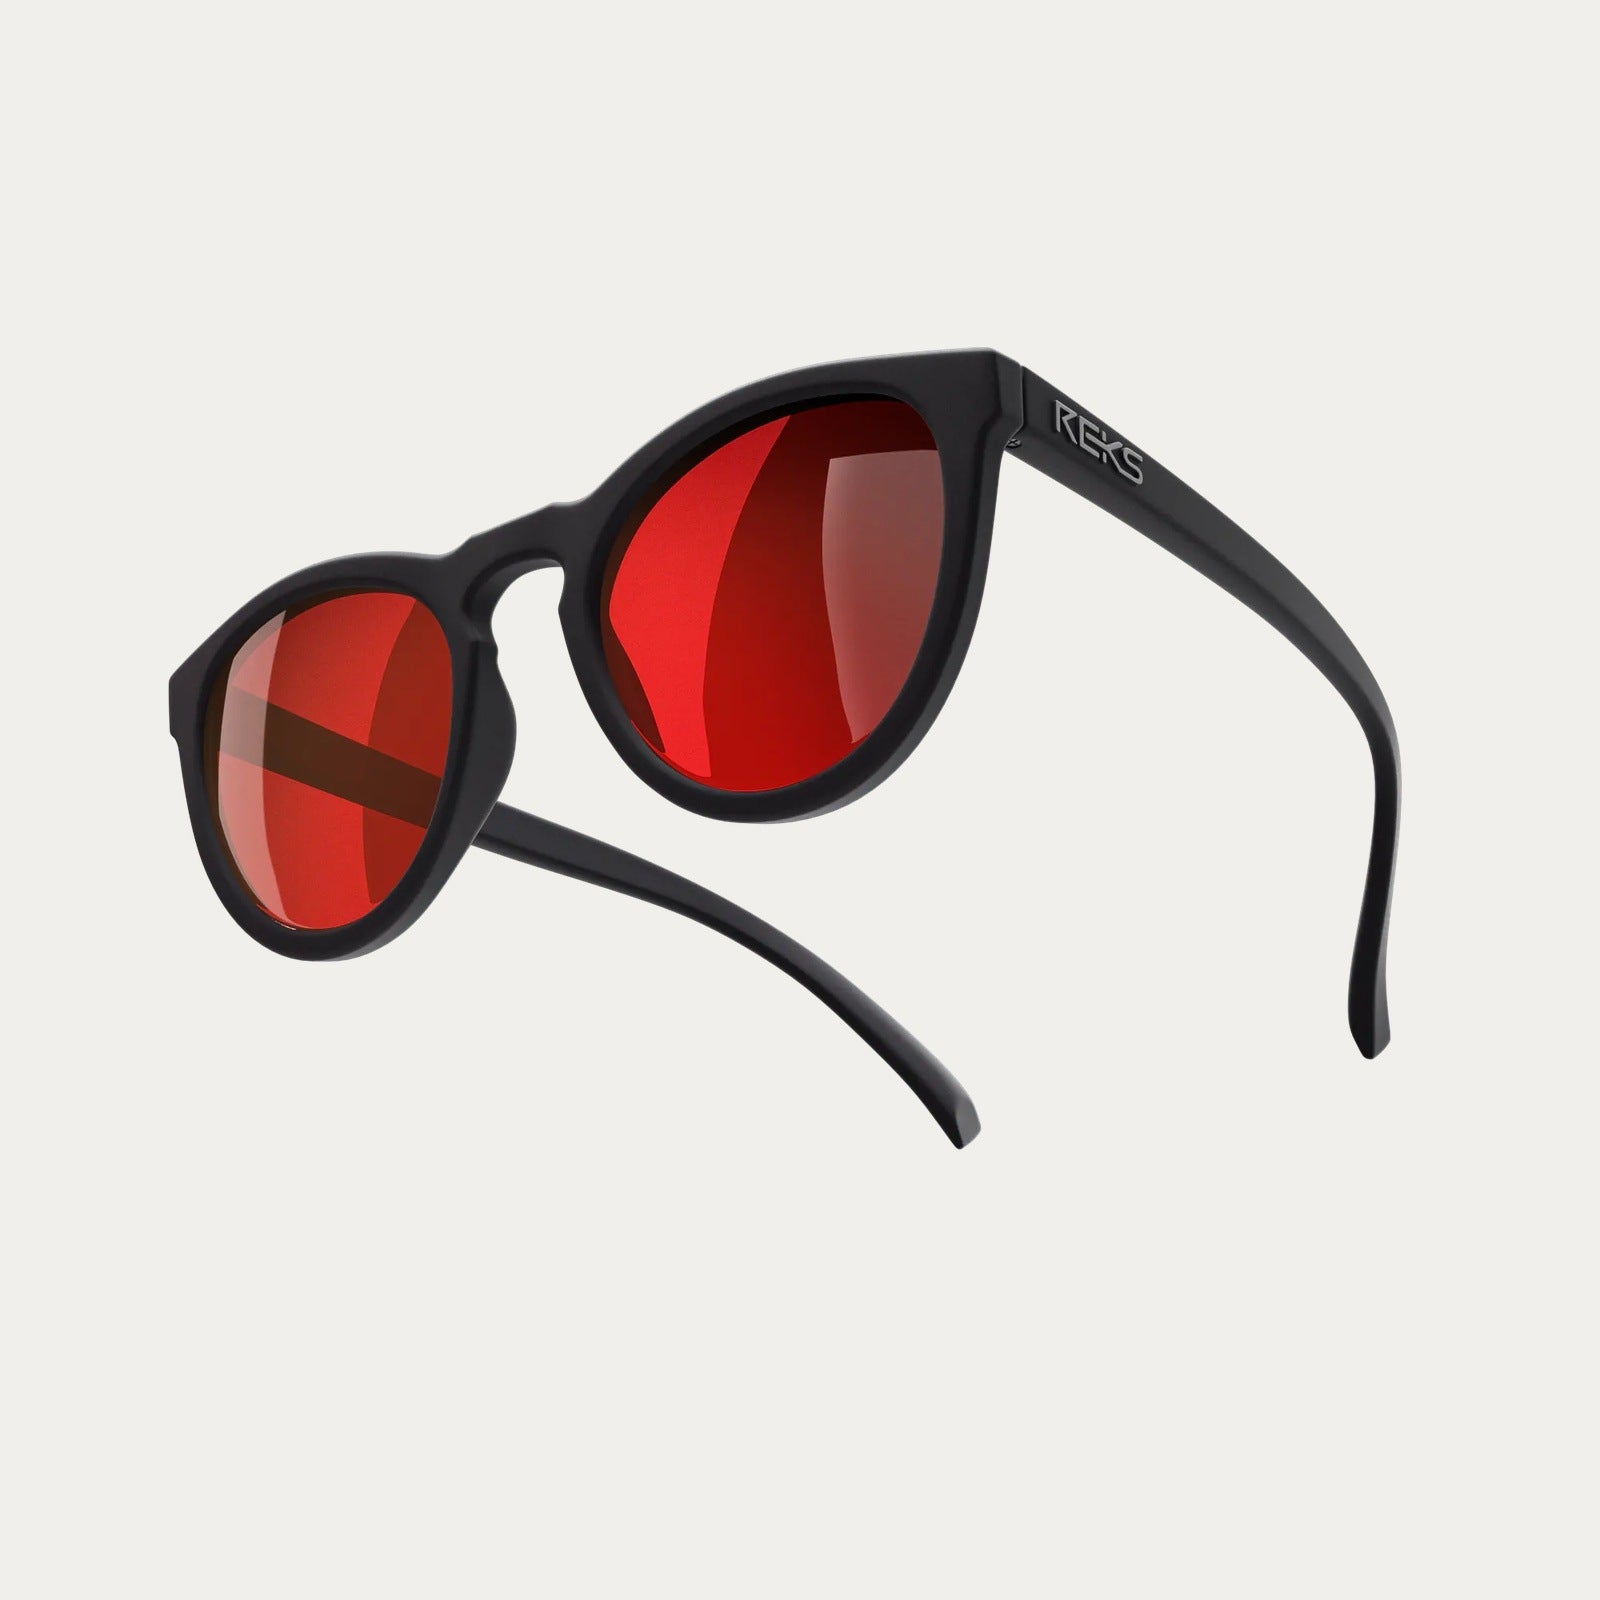 Reks | Round Polarized Polycarbonate Sunglasses Black Red Mirror